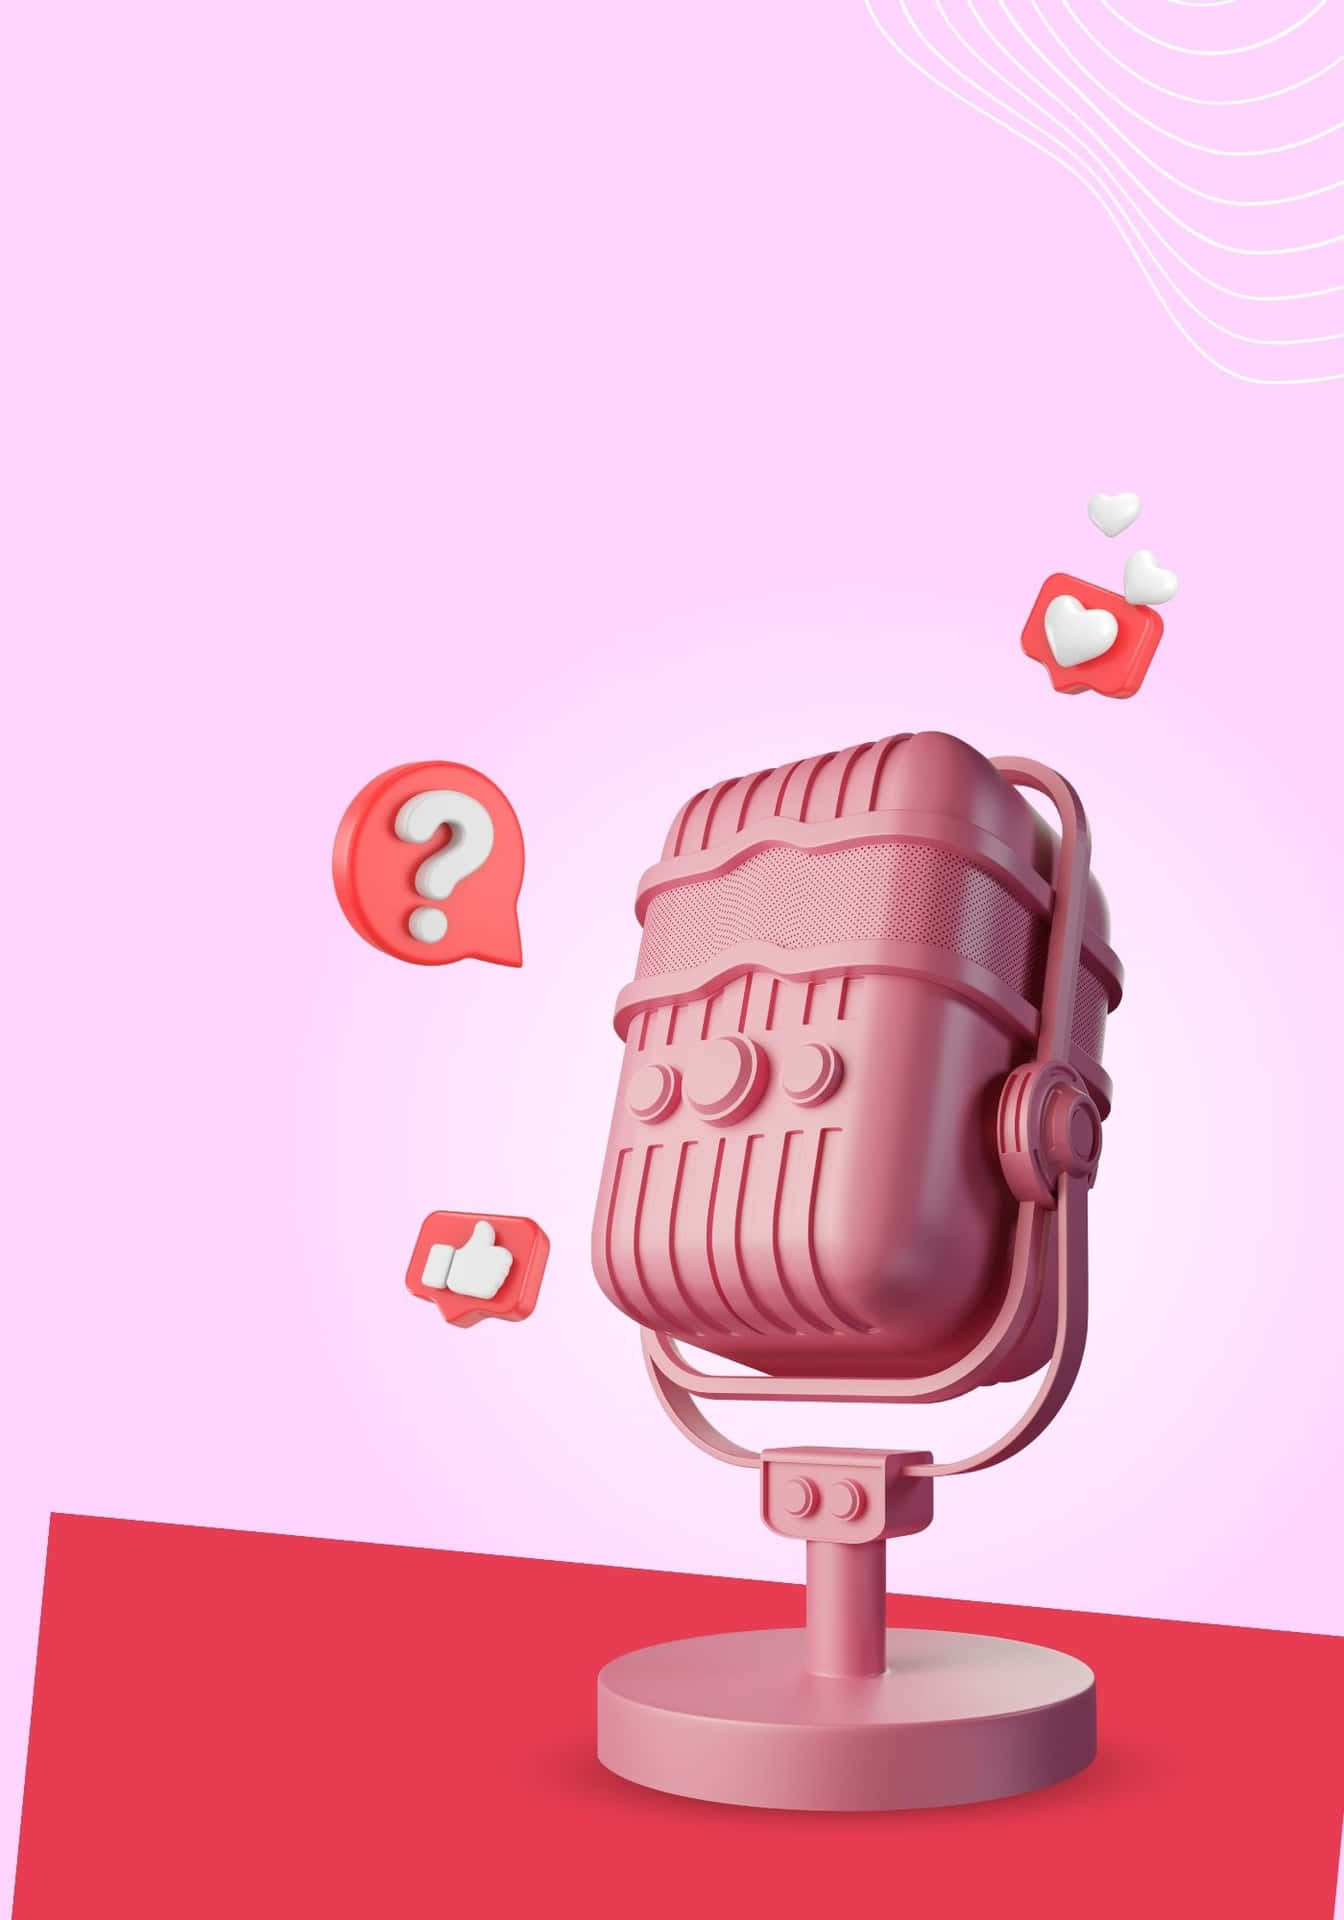 Coole3d Hintergrund Mit Pinkem Mikrofon